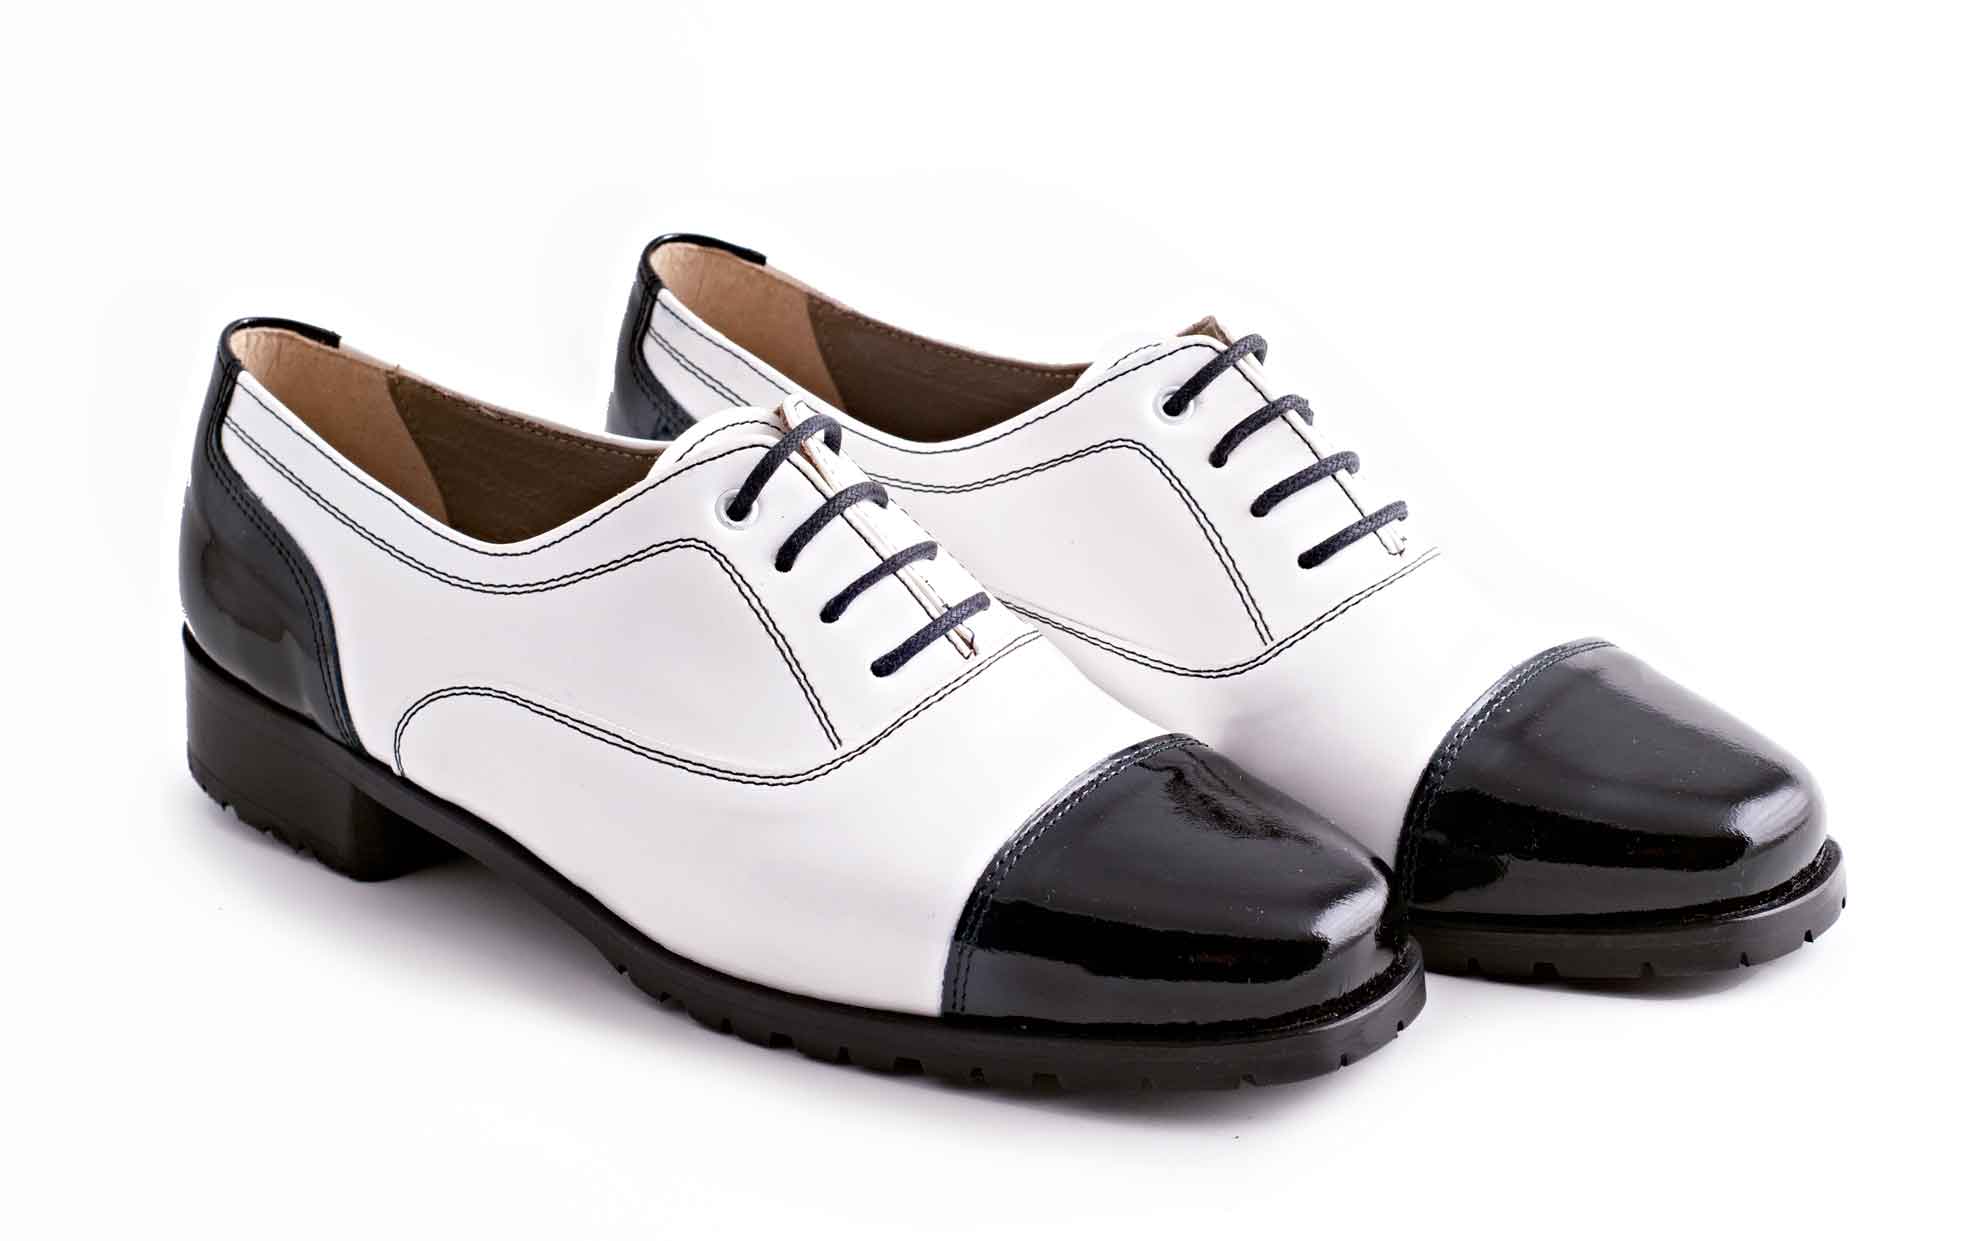 Triturado Bajo mandato Novio Zapato modelo Chrarlí, fabricado en charol negro y blanco.